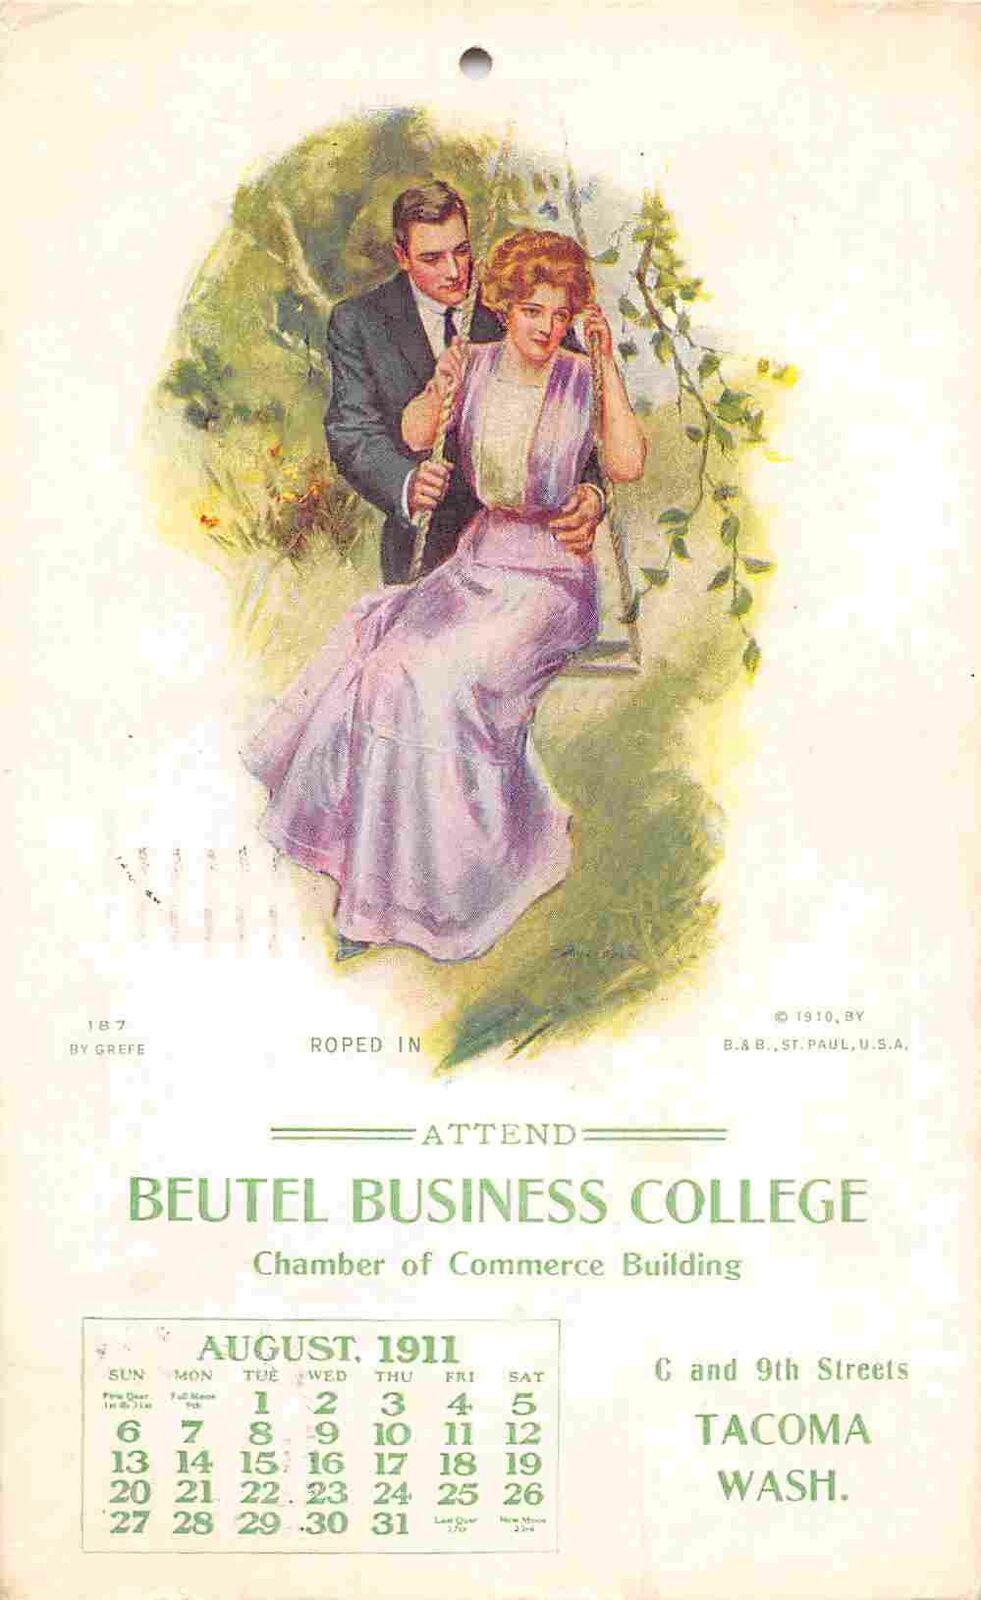 Beutel Business College August 1911 calendar Tacoma Washington postcard